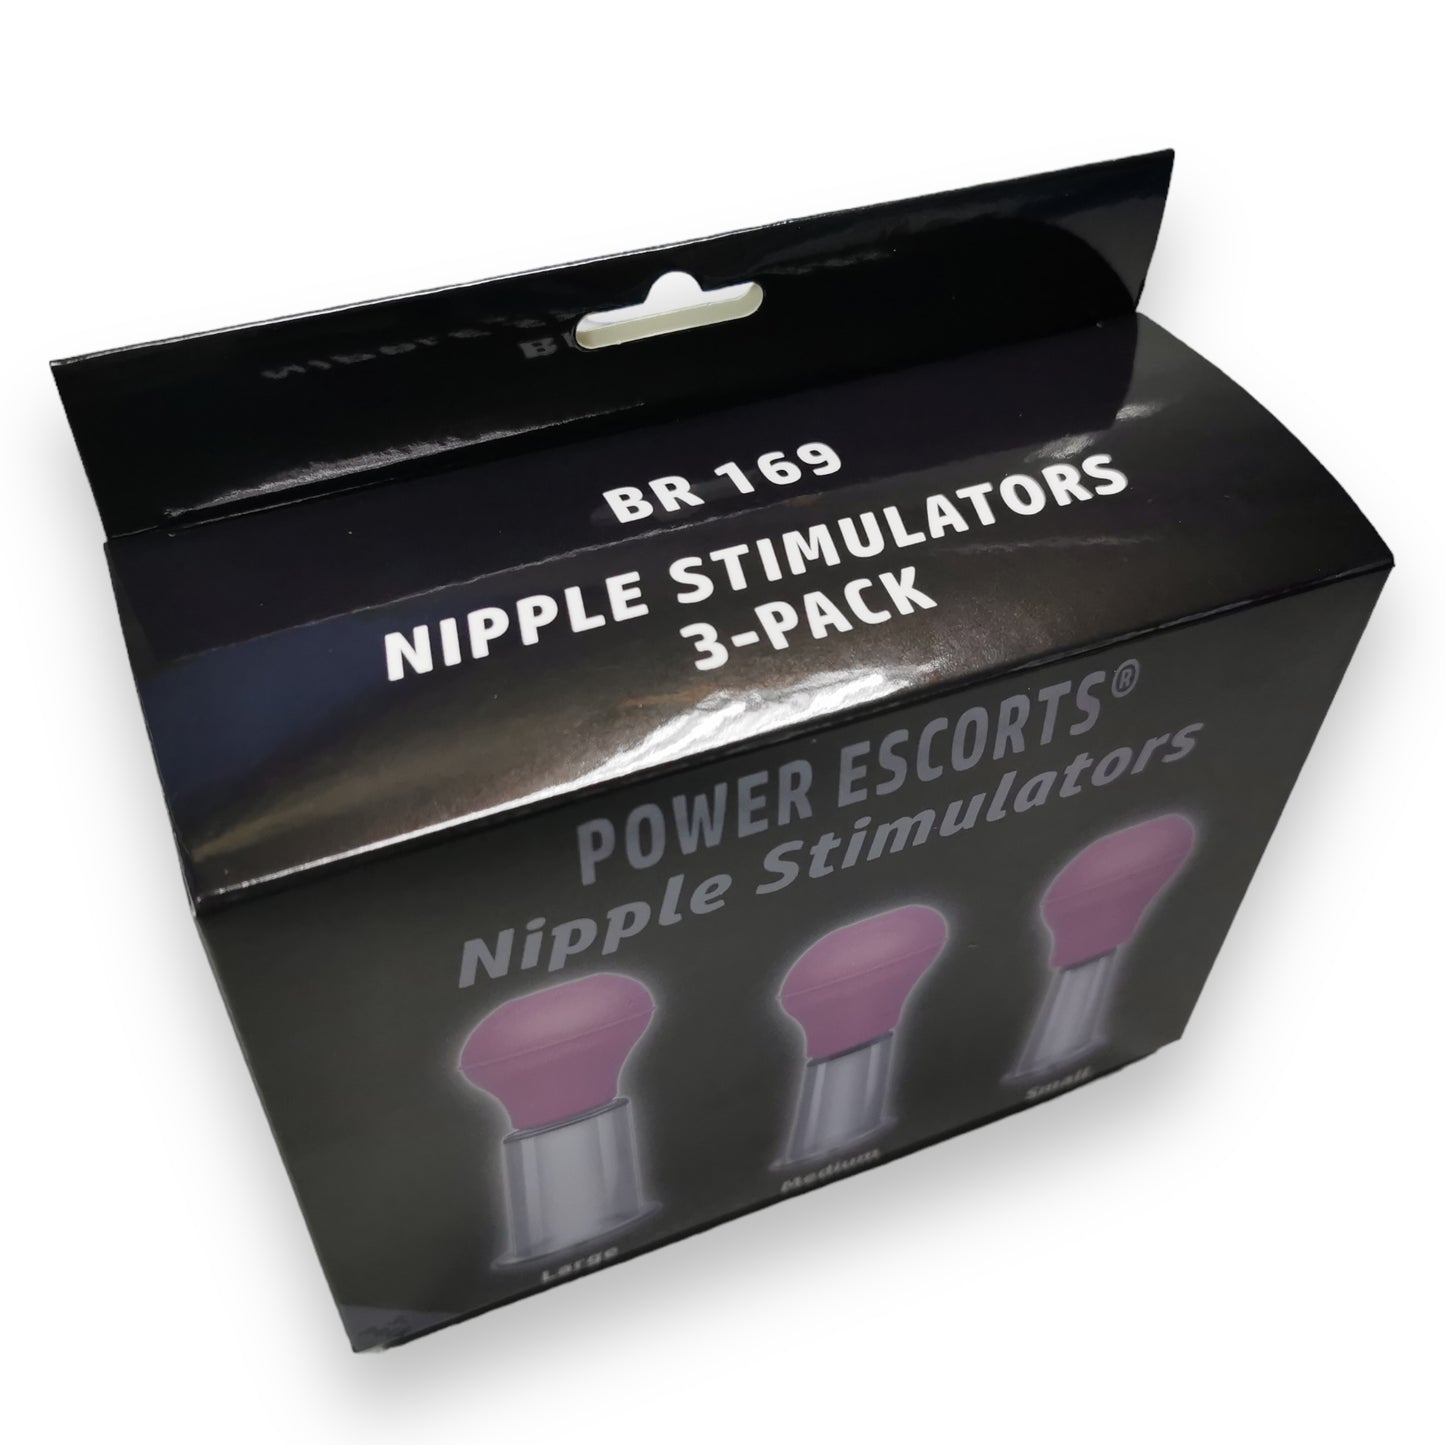 Power Escorts - BR169 - Nipple Stimulators - Starter 3 Pack - Nipple Pumps - Small/Medium/Large - Pink/Transparant